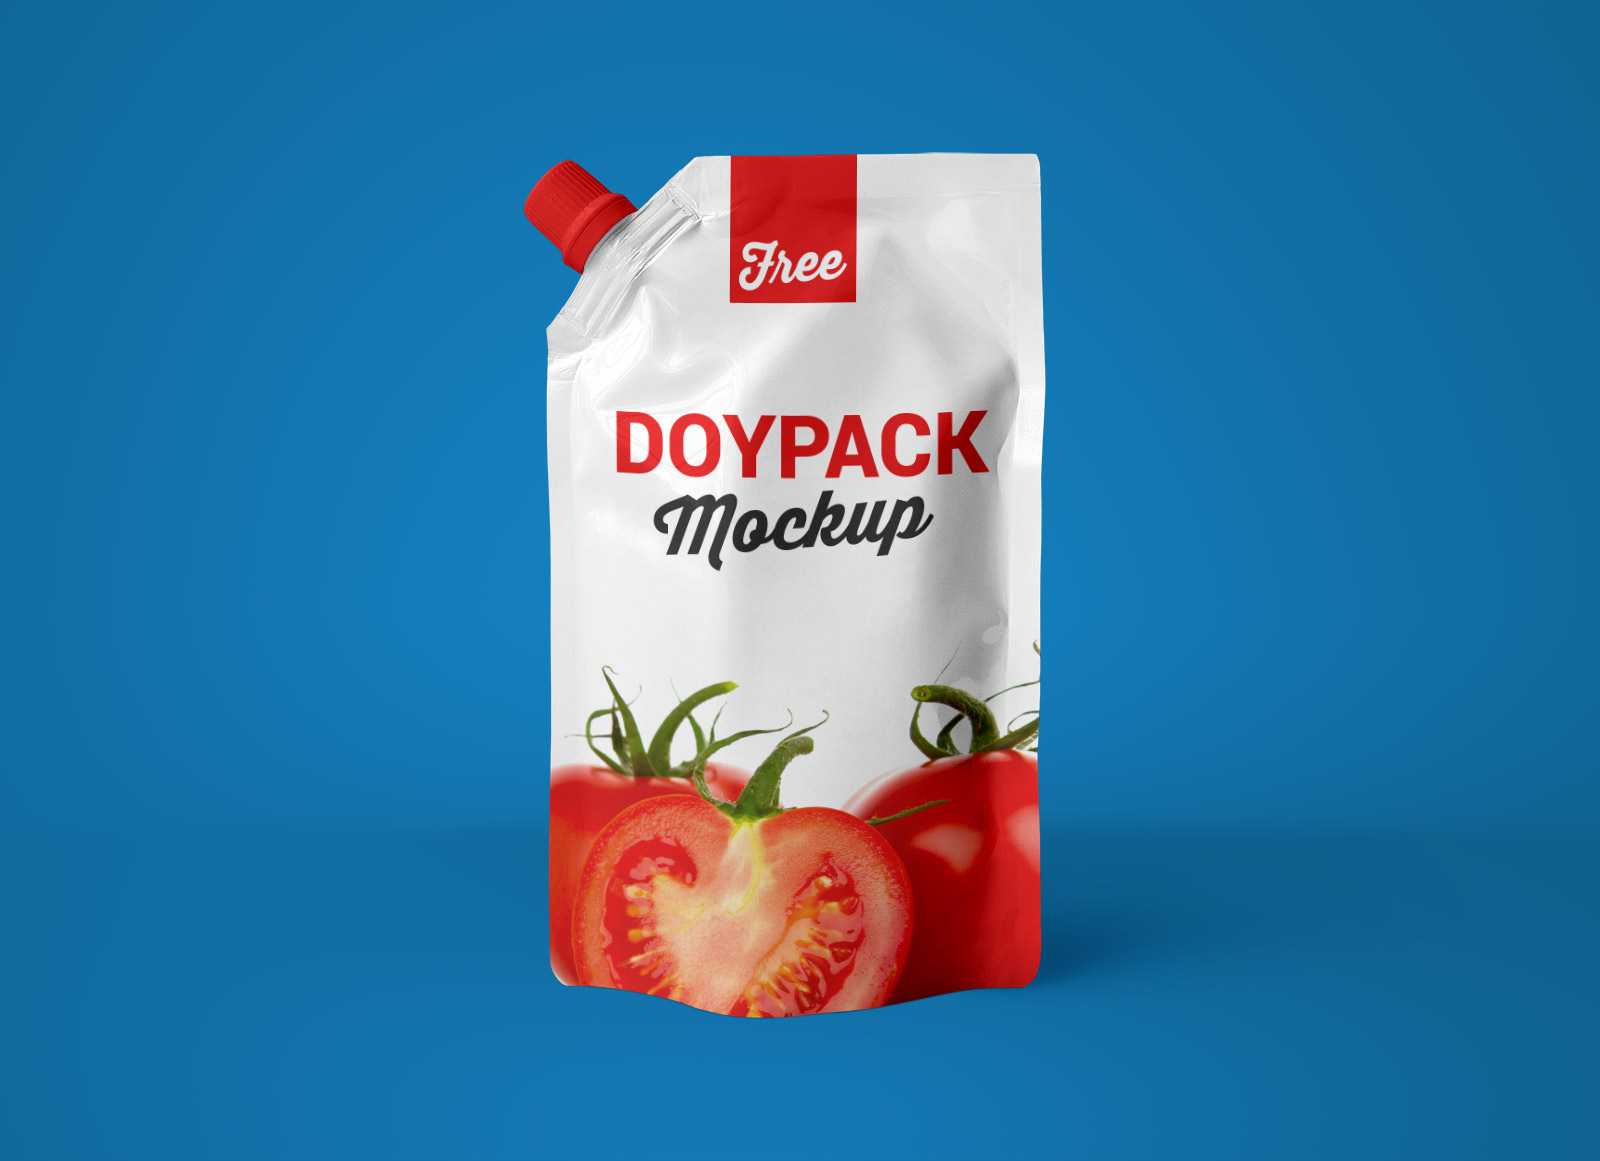 Doypackスタンドアップポーチパッケージングモックアップ